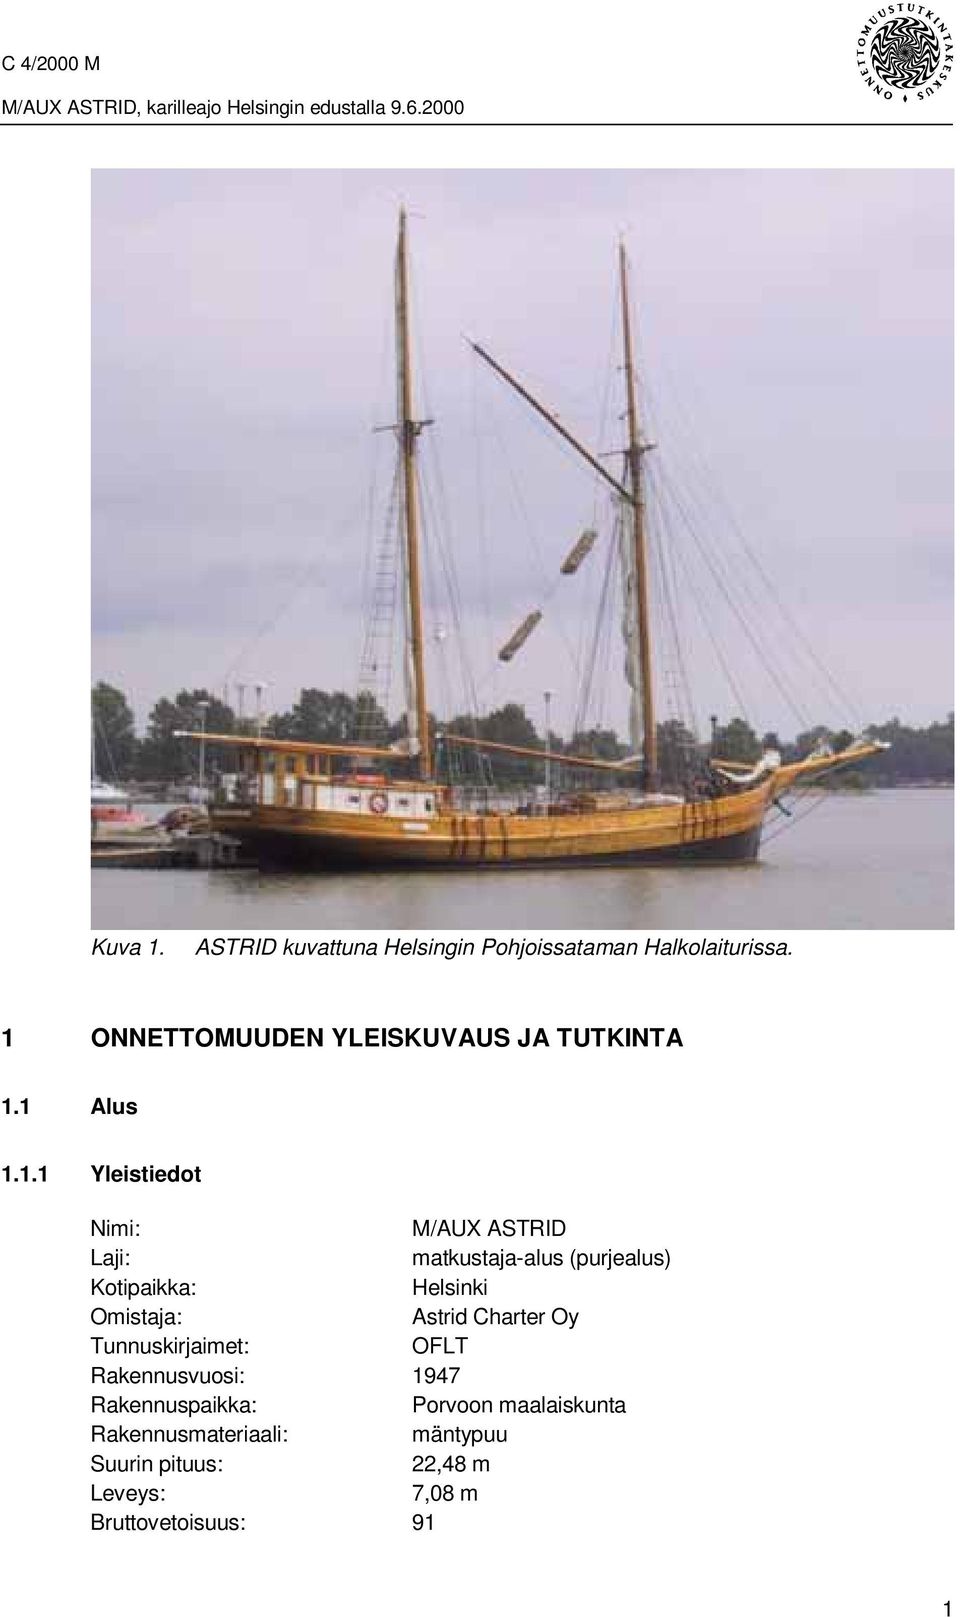 matkustaja-alus (purjealus) Kotipaikka: Helsinki Omistaja: Astrid Charter Oy Tunnuskirjaimet: OFLT